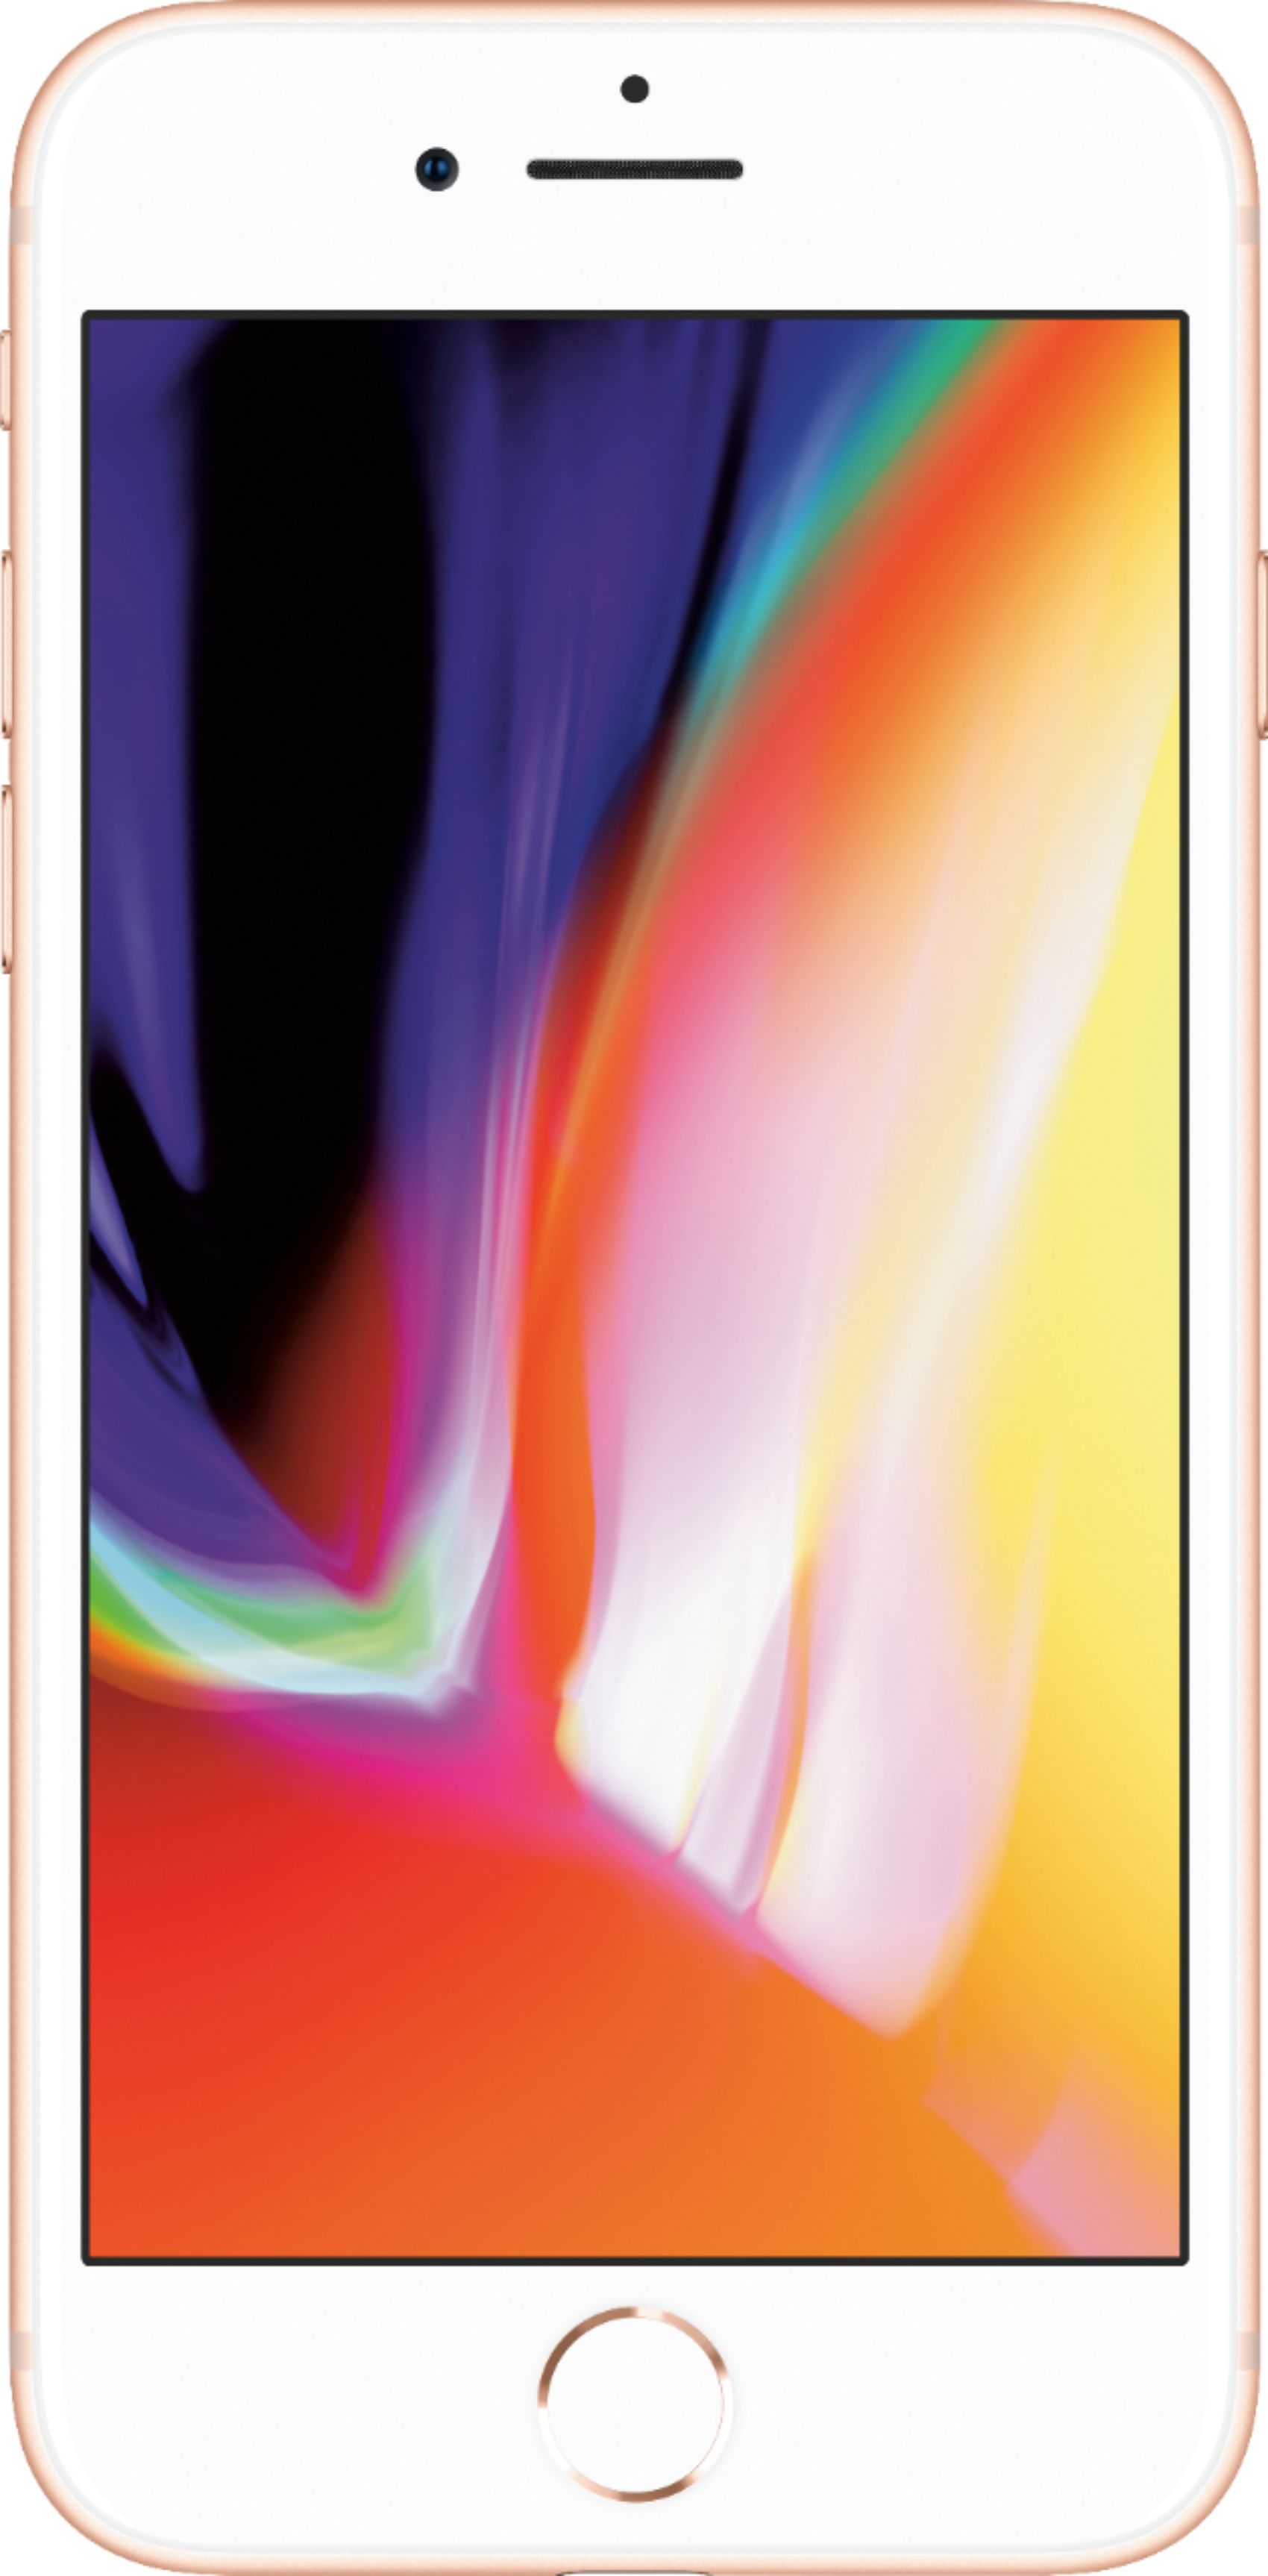 Apple iPhone 8 256GB Gold (Verizon) MQ7H2LL/A - Best Buy